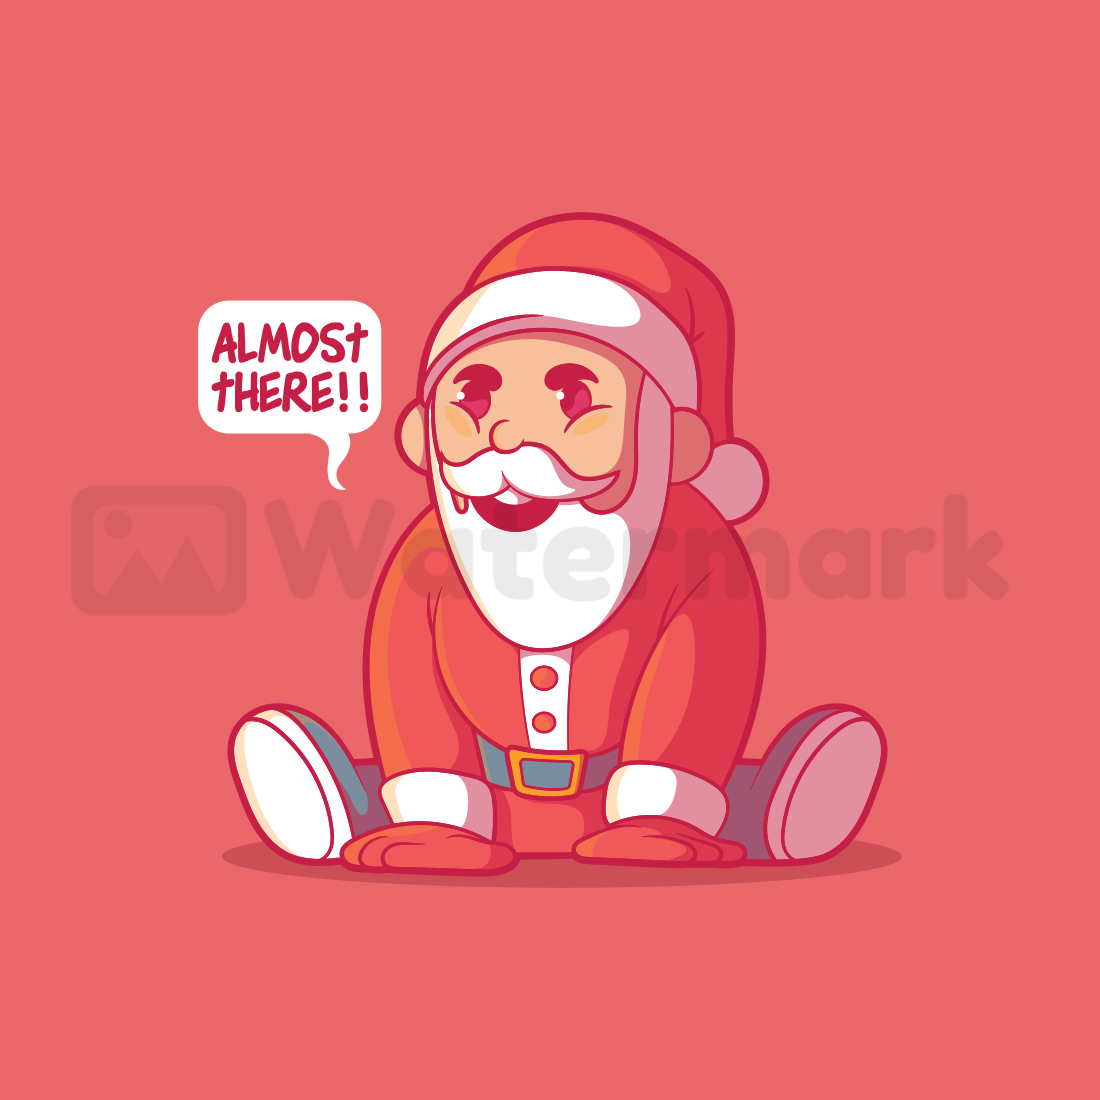 Relaxing Santa Design Illustration cover image.